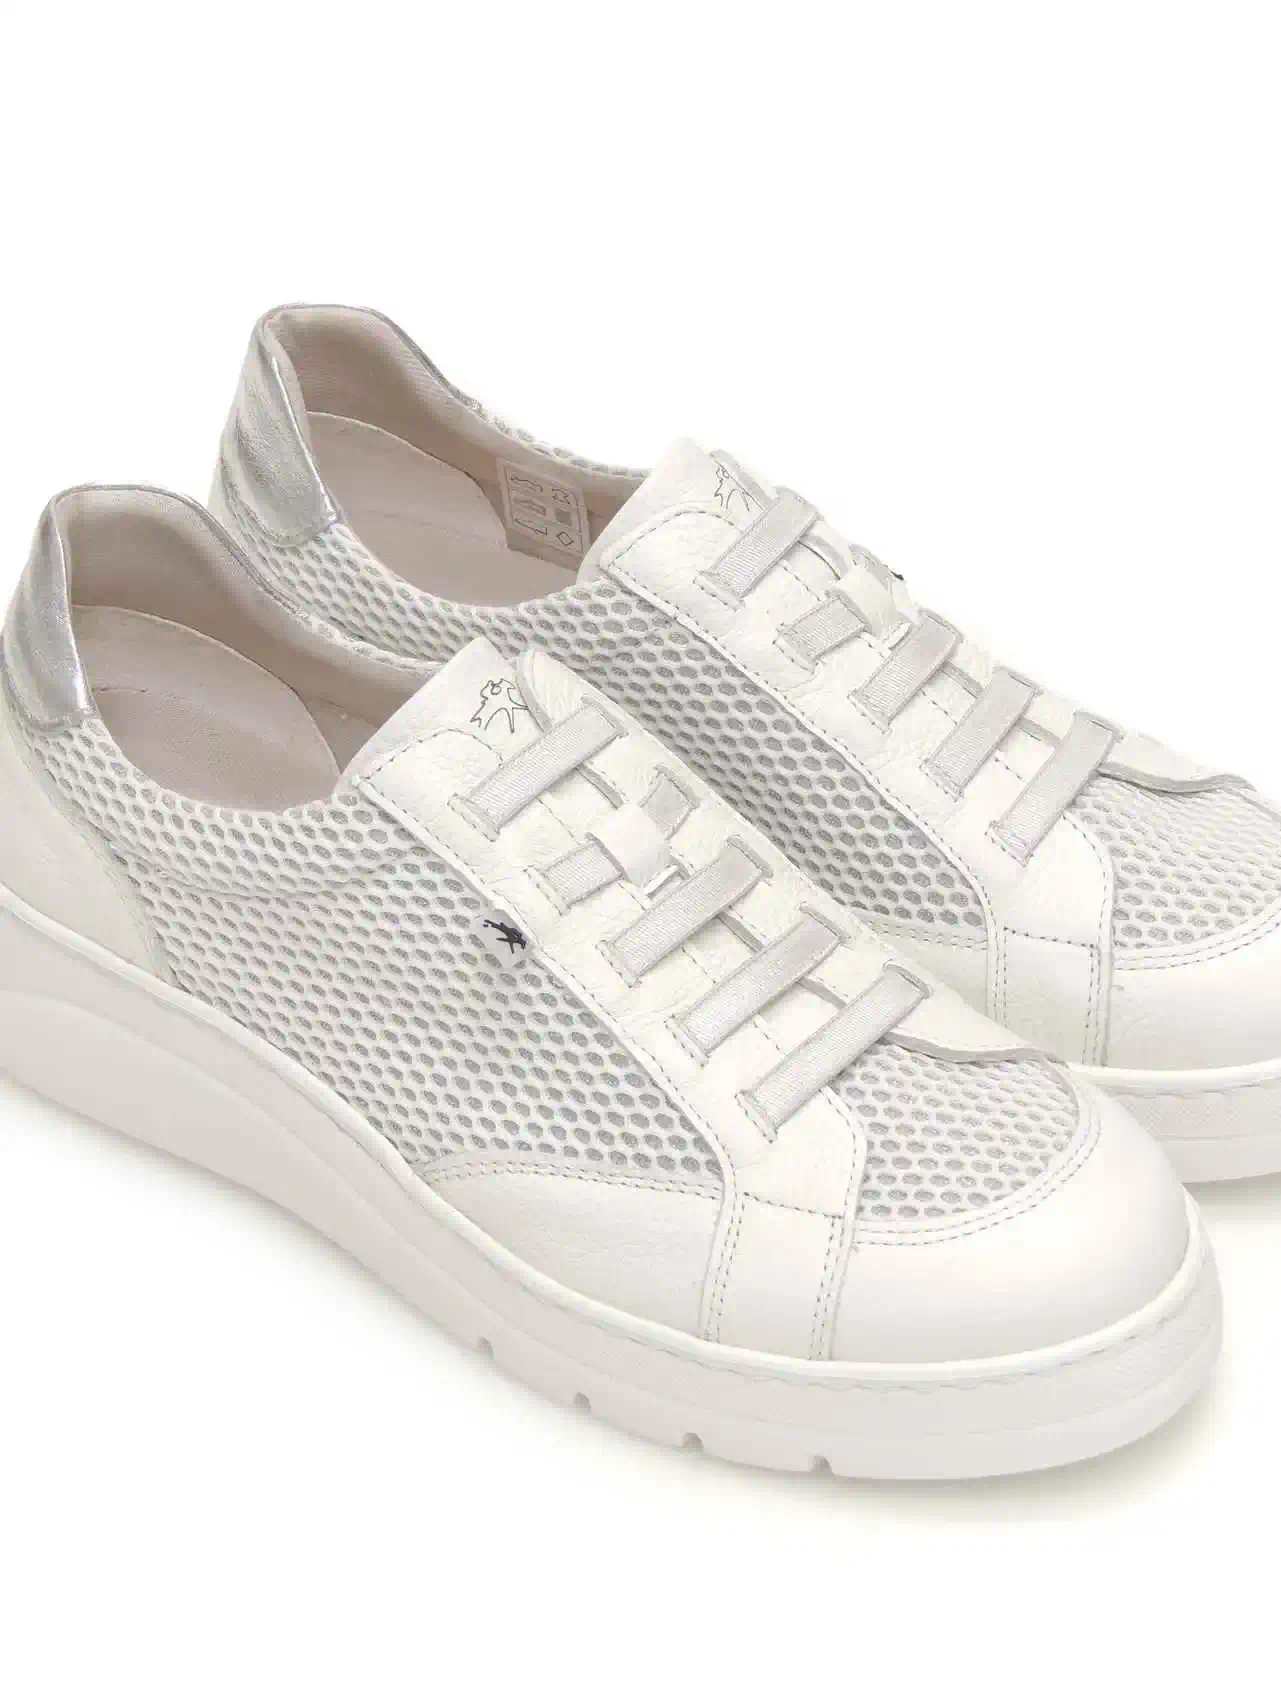 sneakers--fluchos-f1668-piel-blanco